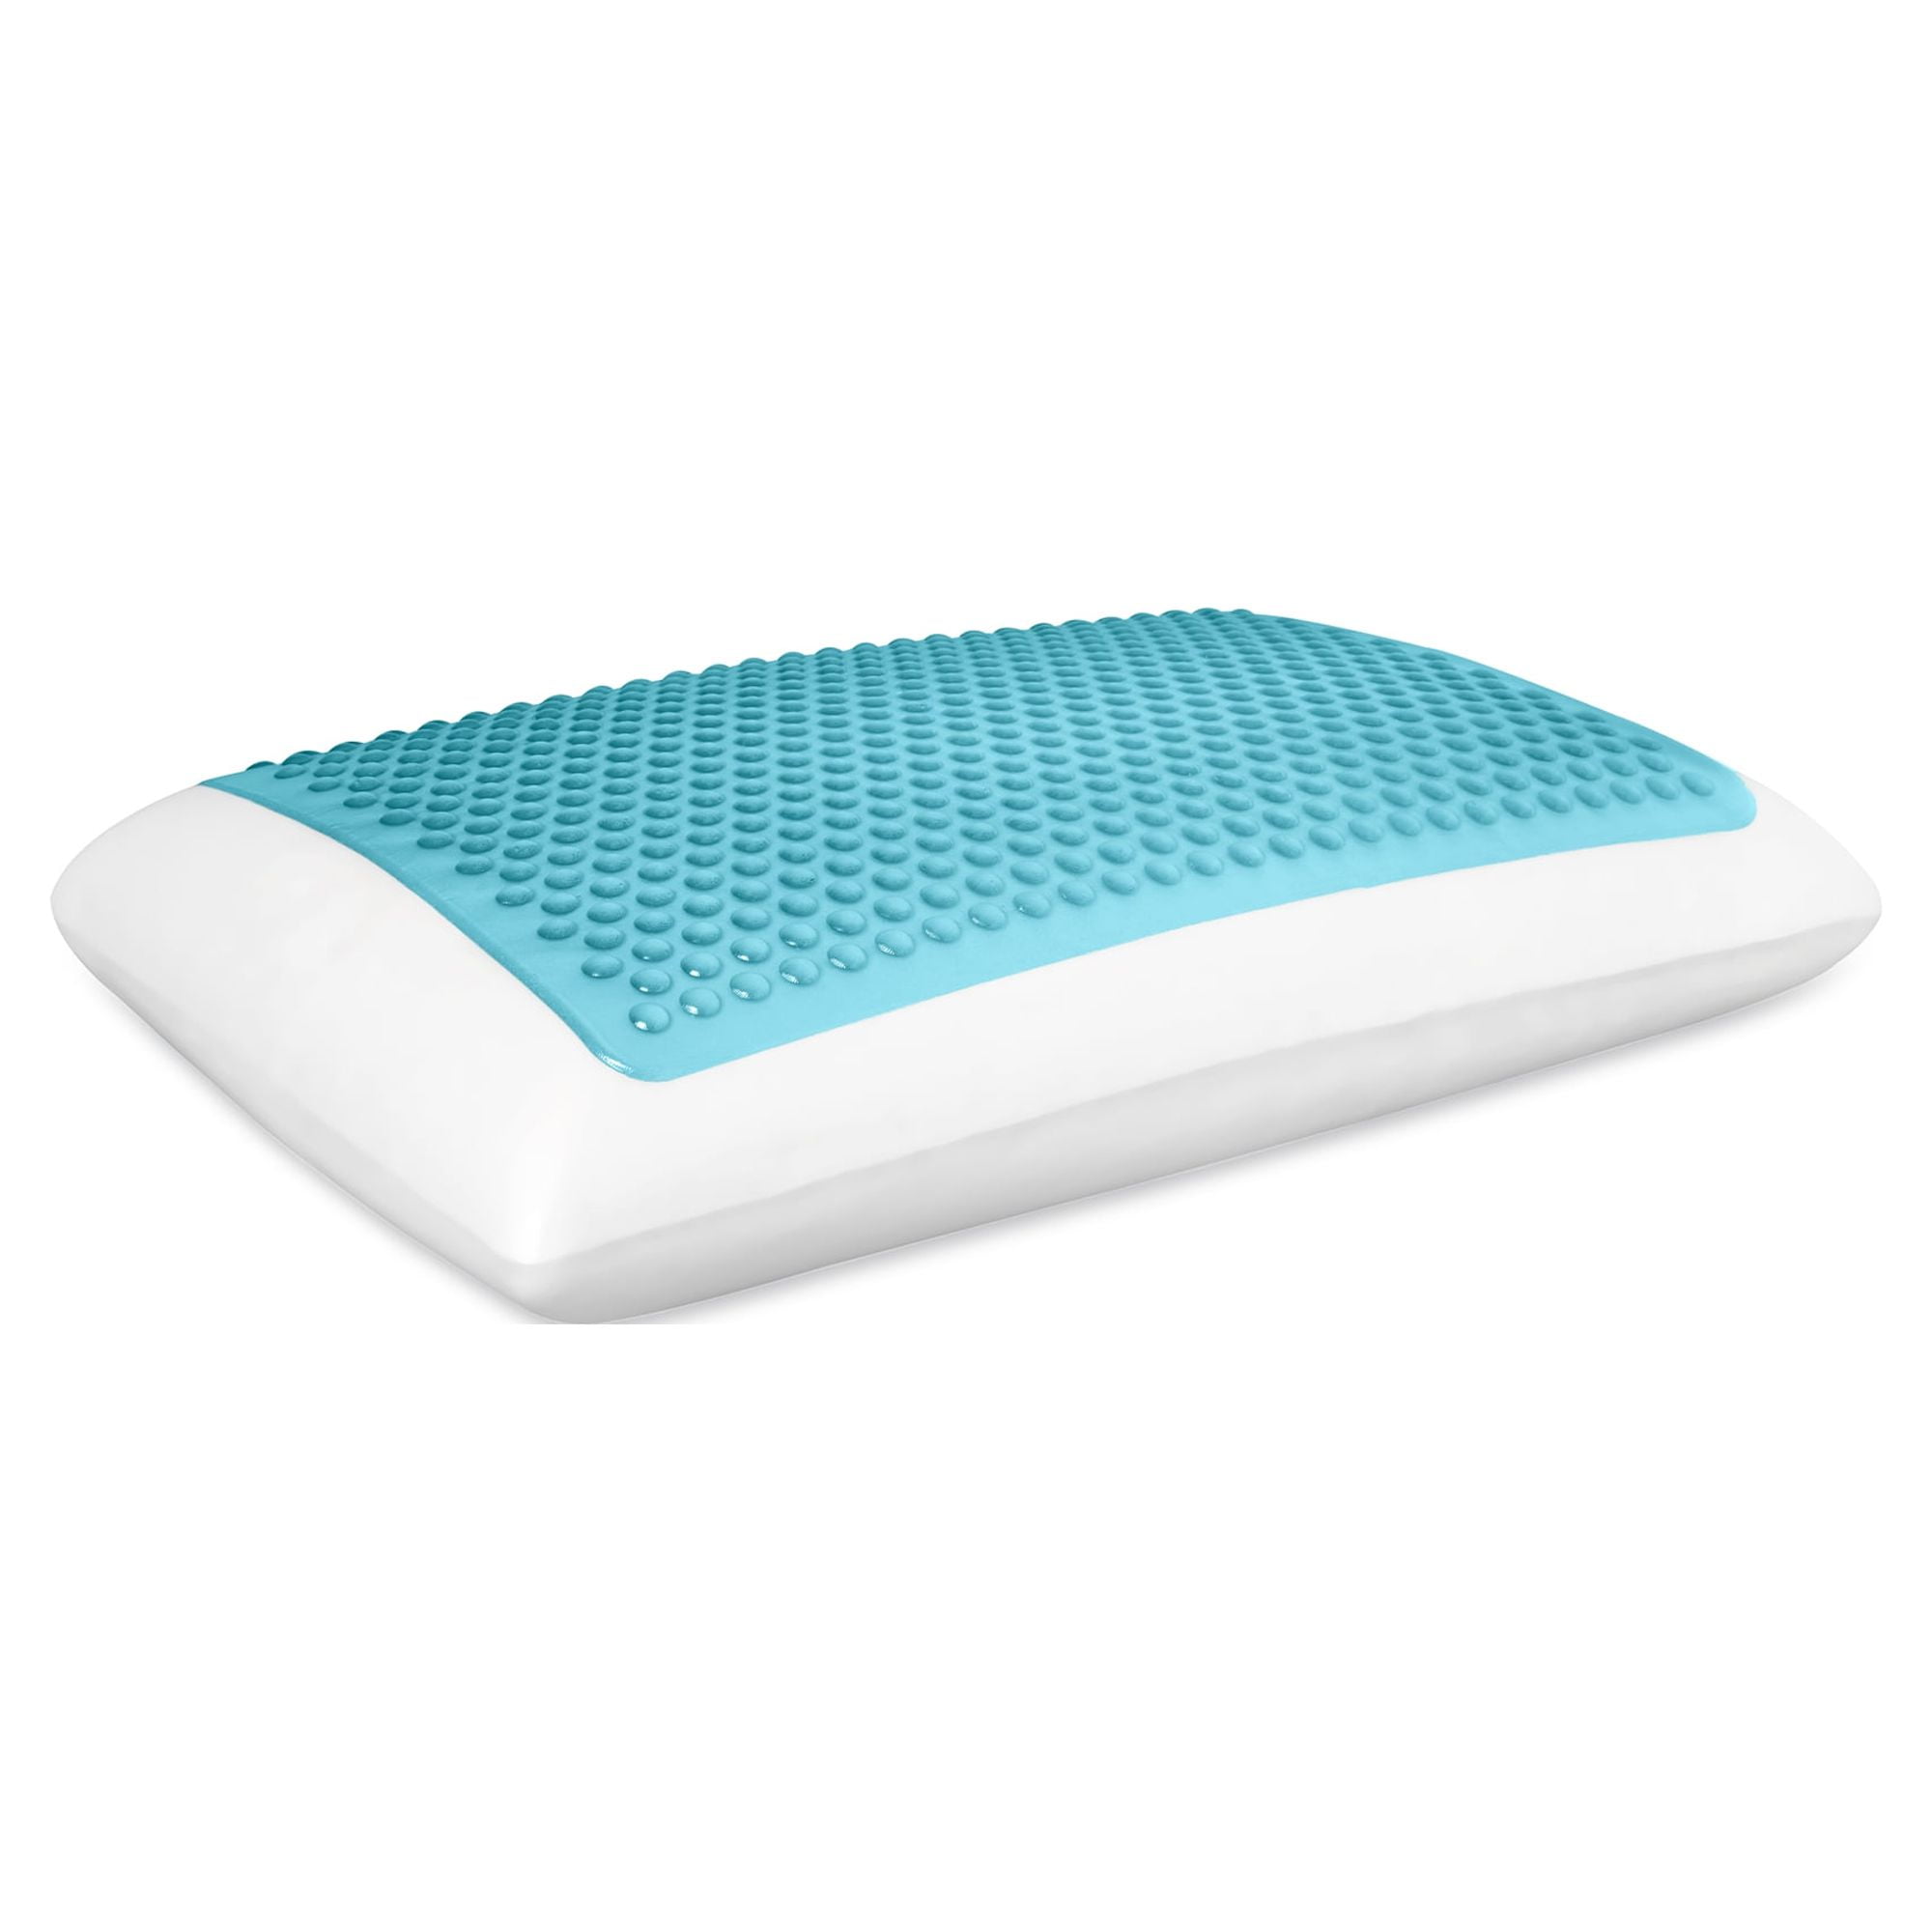 Comfort Revolution Originals Blue Bubble Gel + Memory Foam Cooling Bed Pillow, Standard Size - image 1 of 10